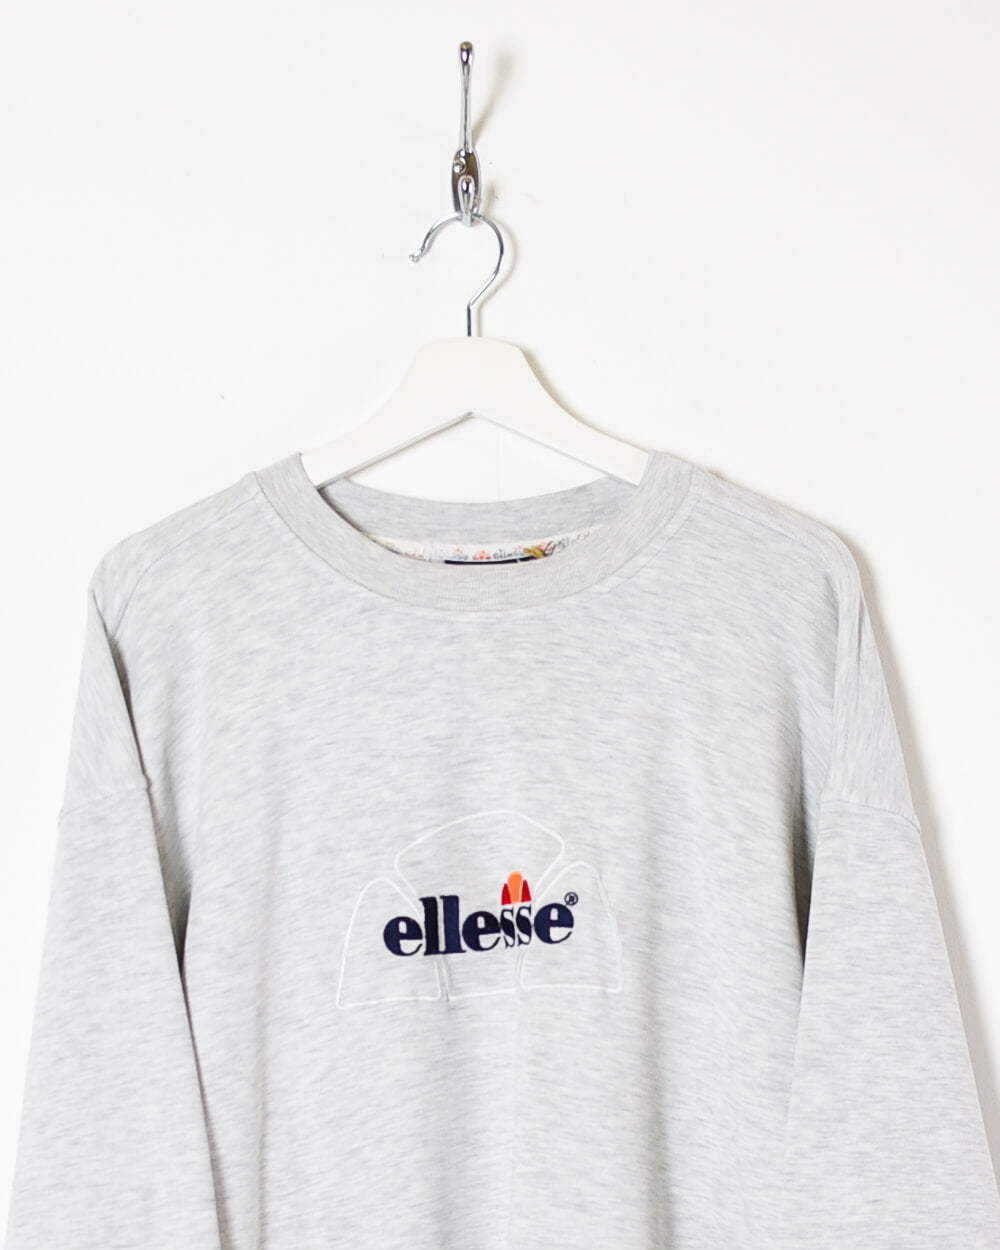 Stone Ellesse Sweatshirt - X-Large